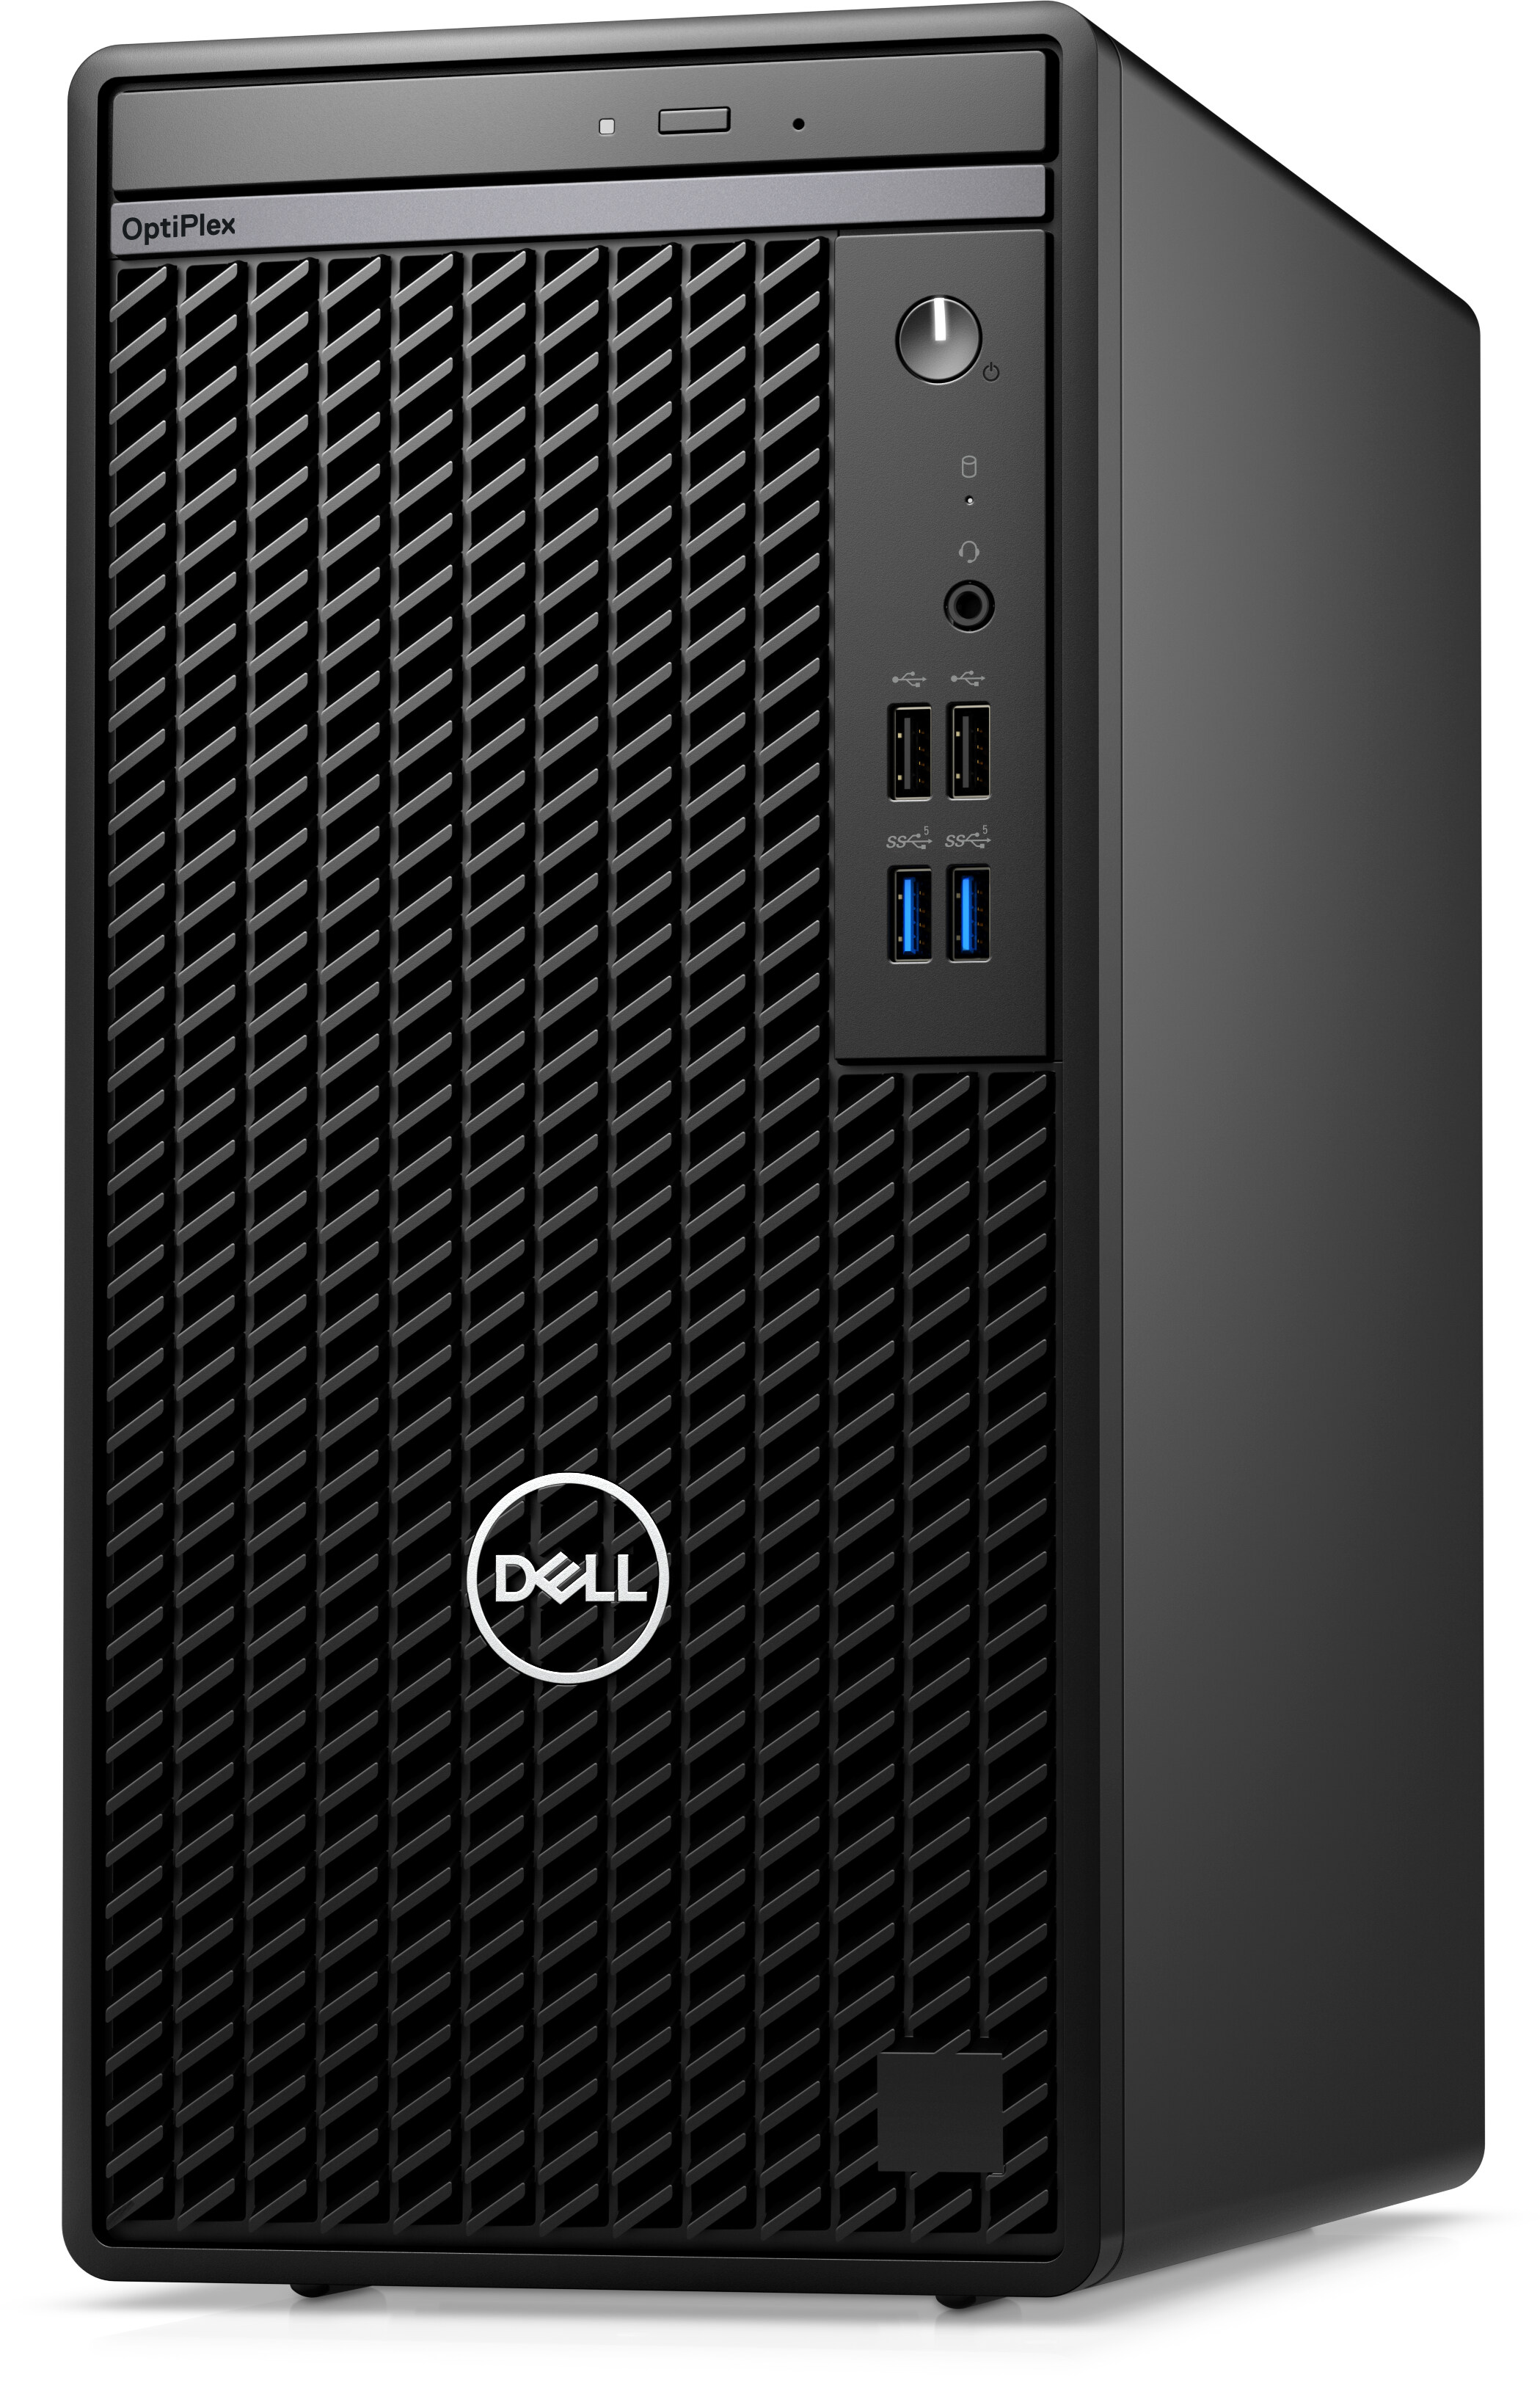 Dell OptiPlex Tower Desktop | Dell USA